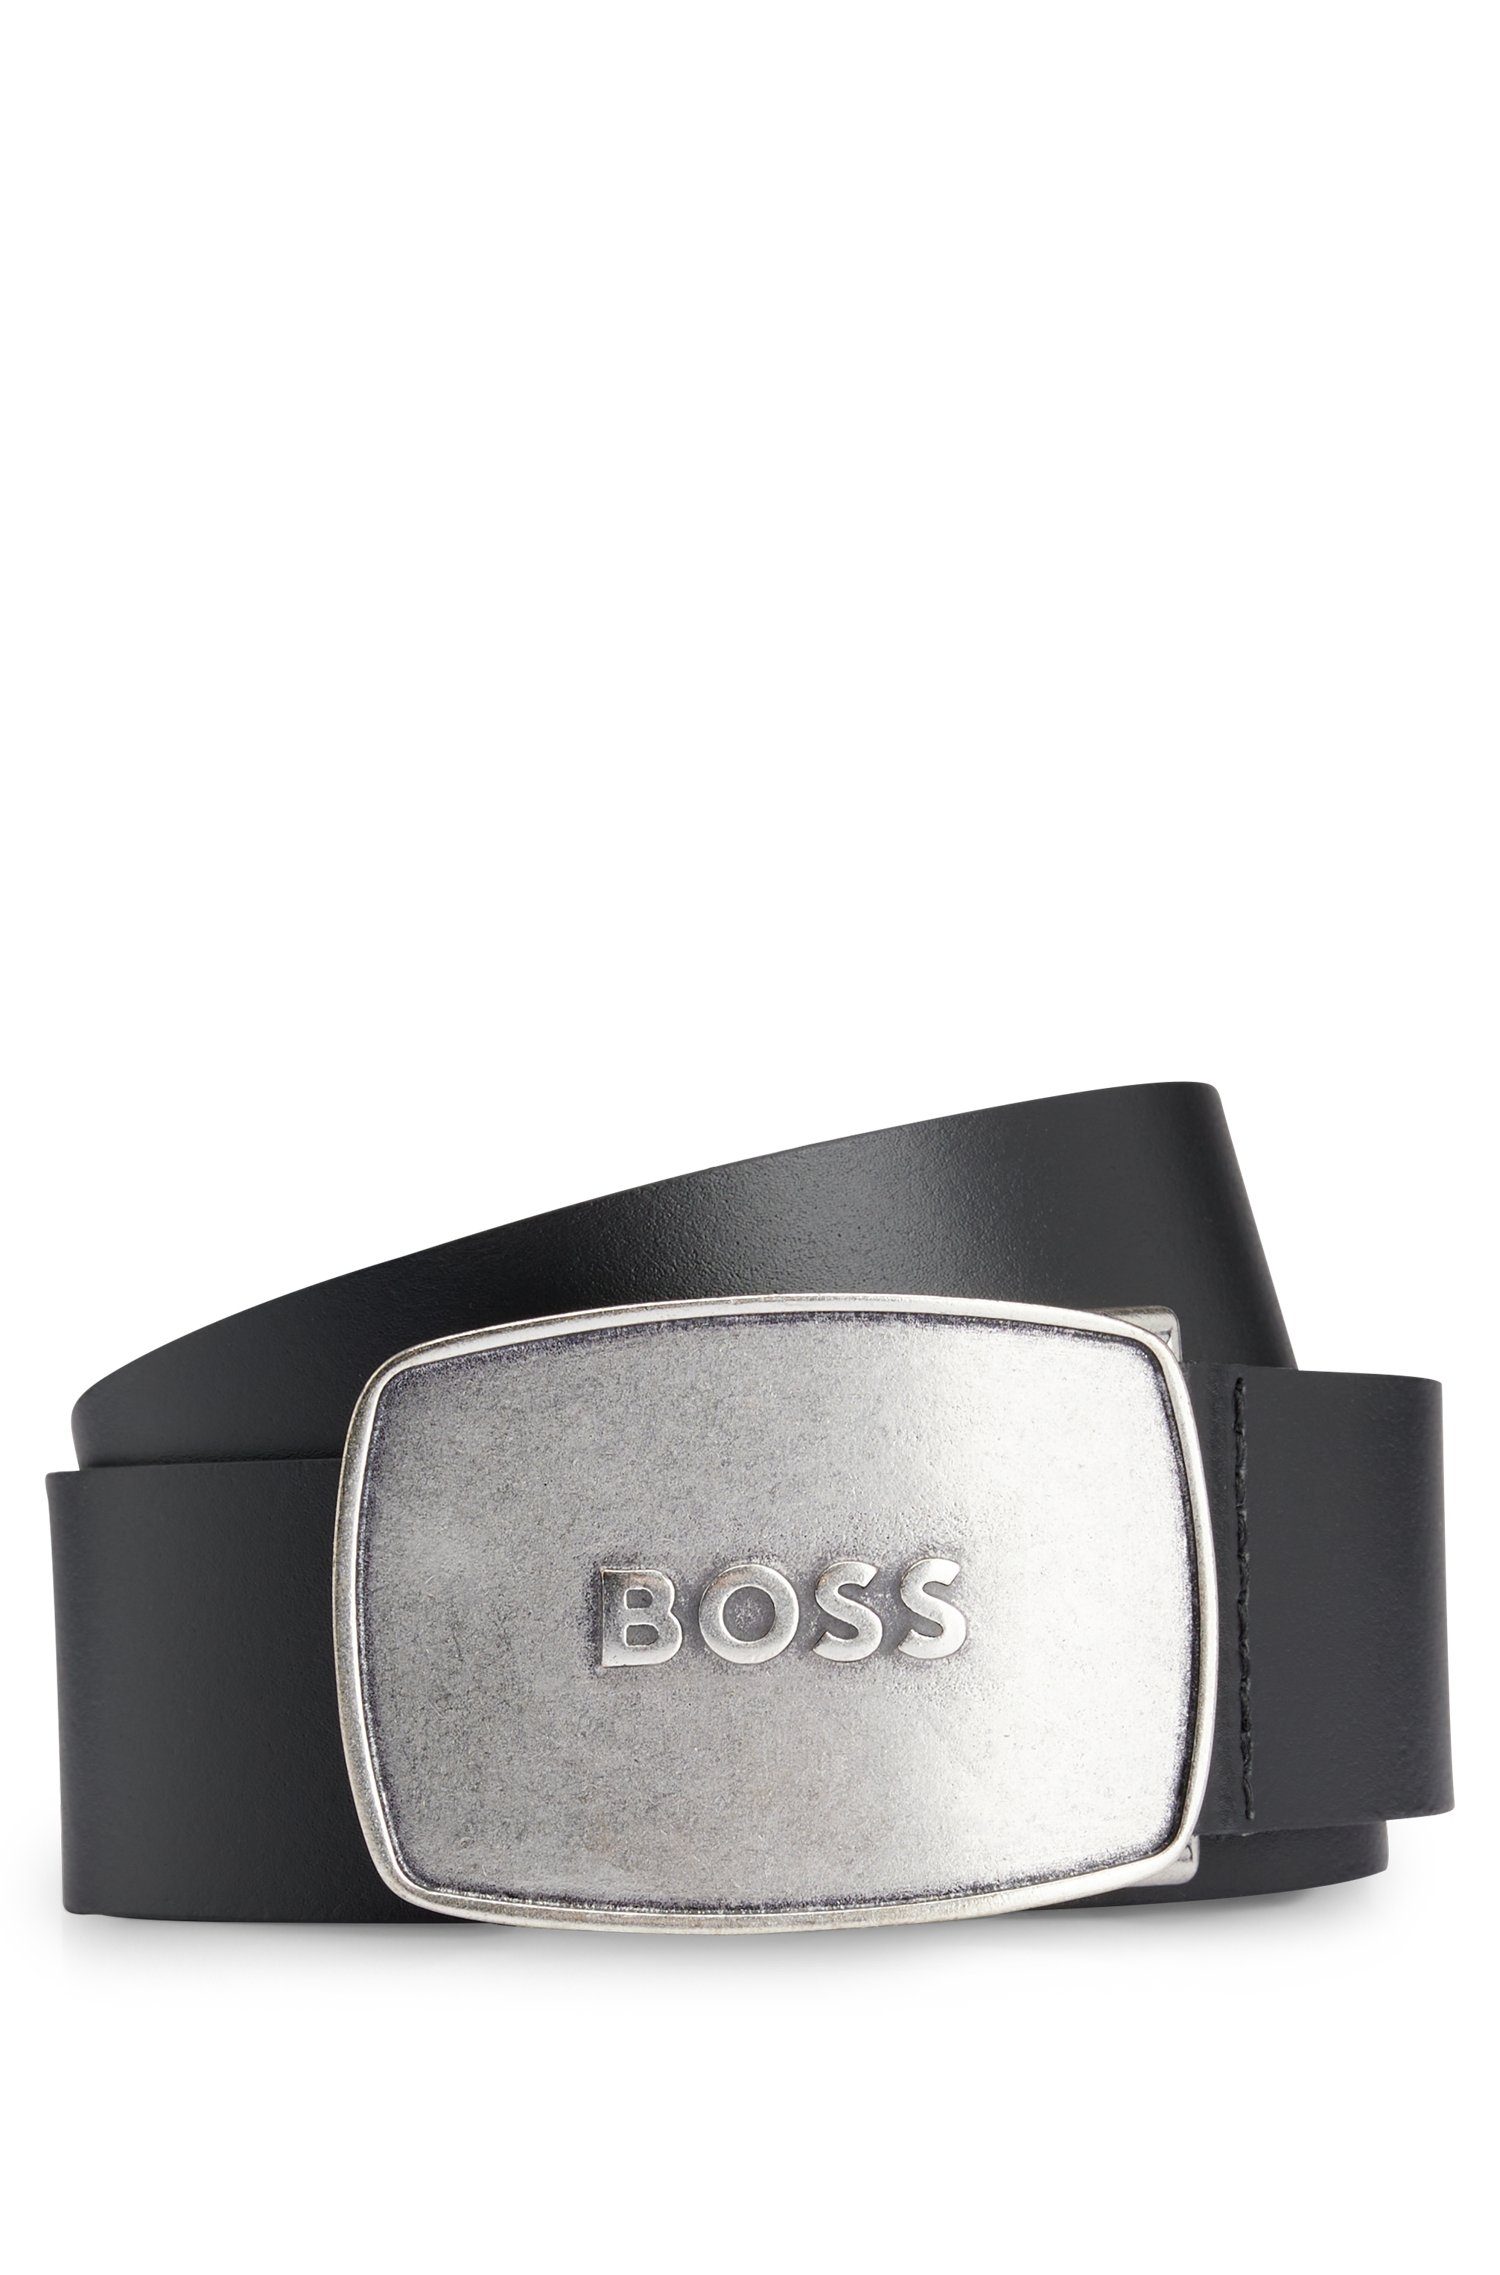 aus Logo-Schnalle mit BOSS Ledergürtel auffälliger Boss_Icon-EP_Sz40 Metall